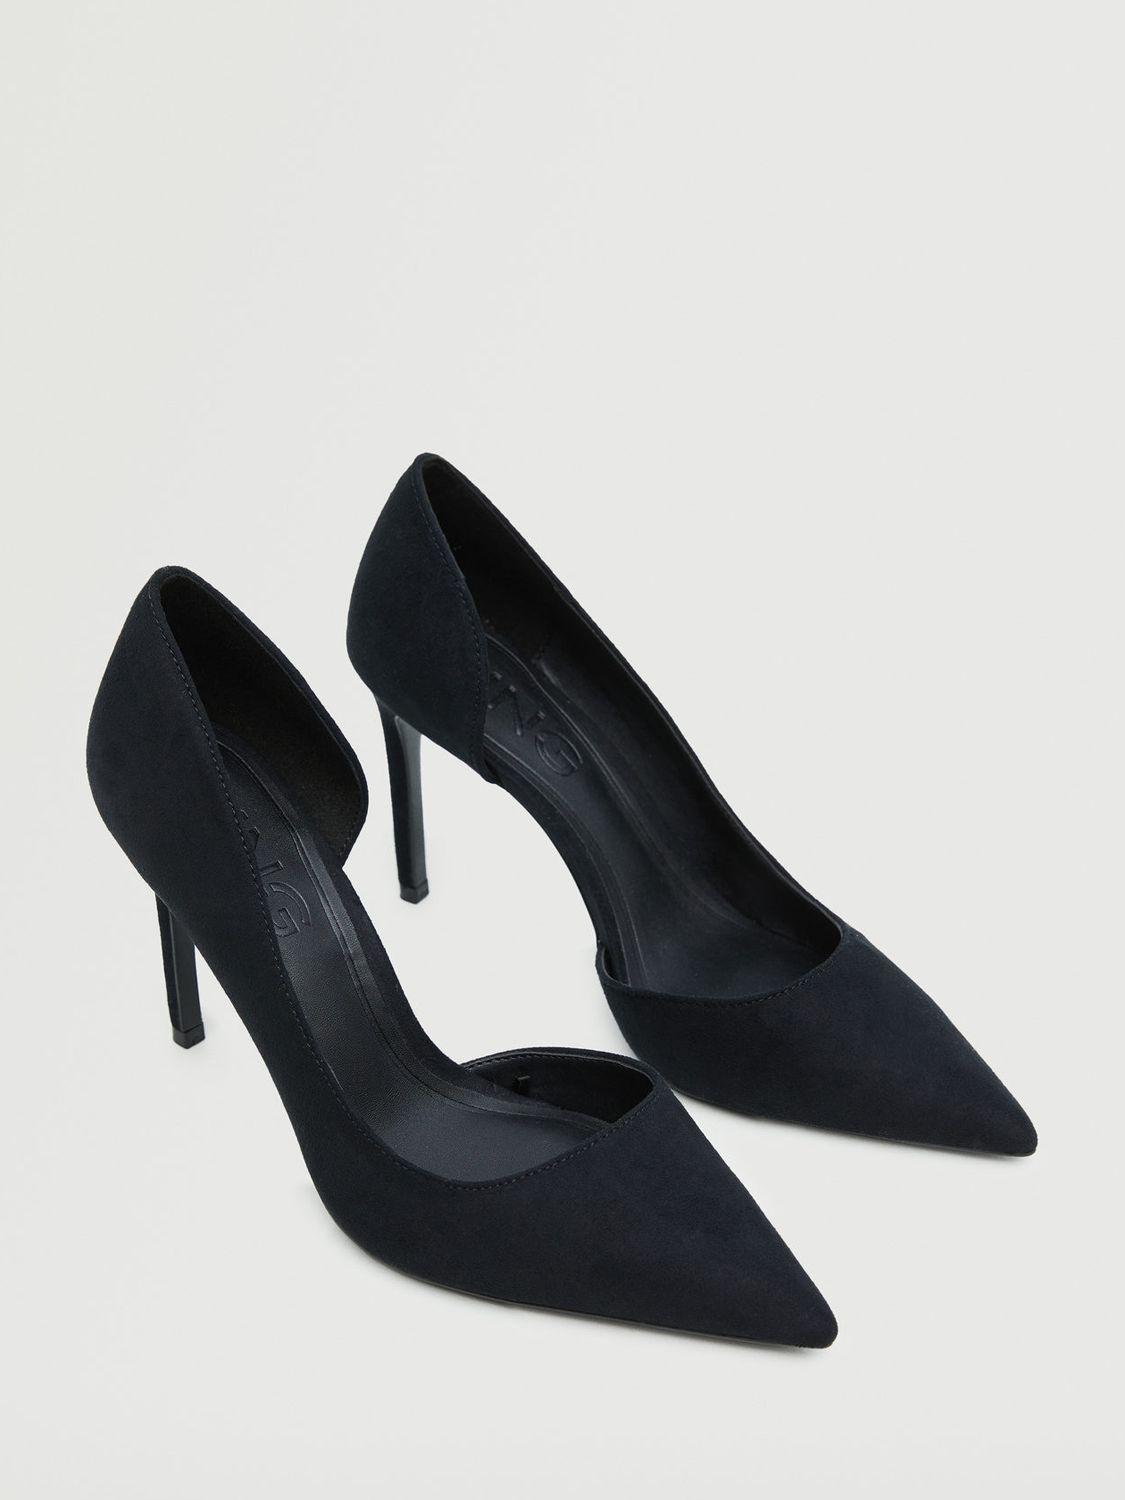 Mango Audrey Stiletto Heel Court Shoes, Black at John Lewis & Partners